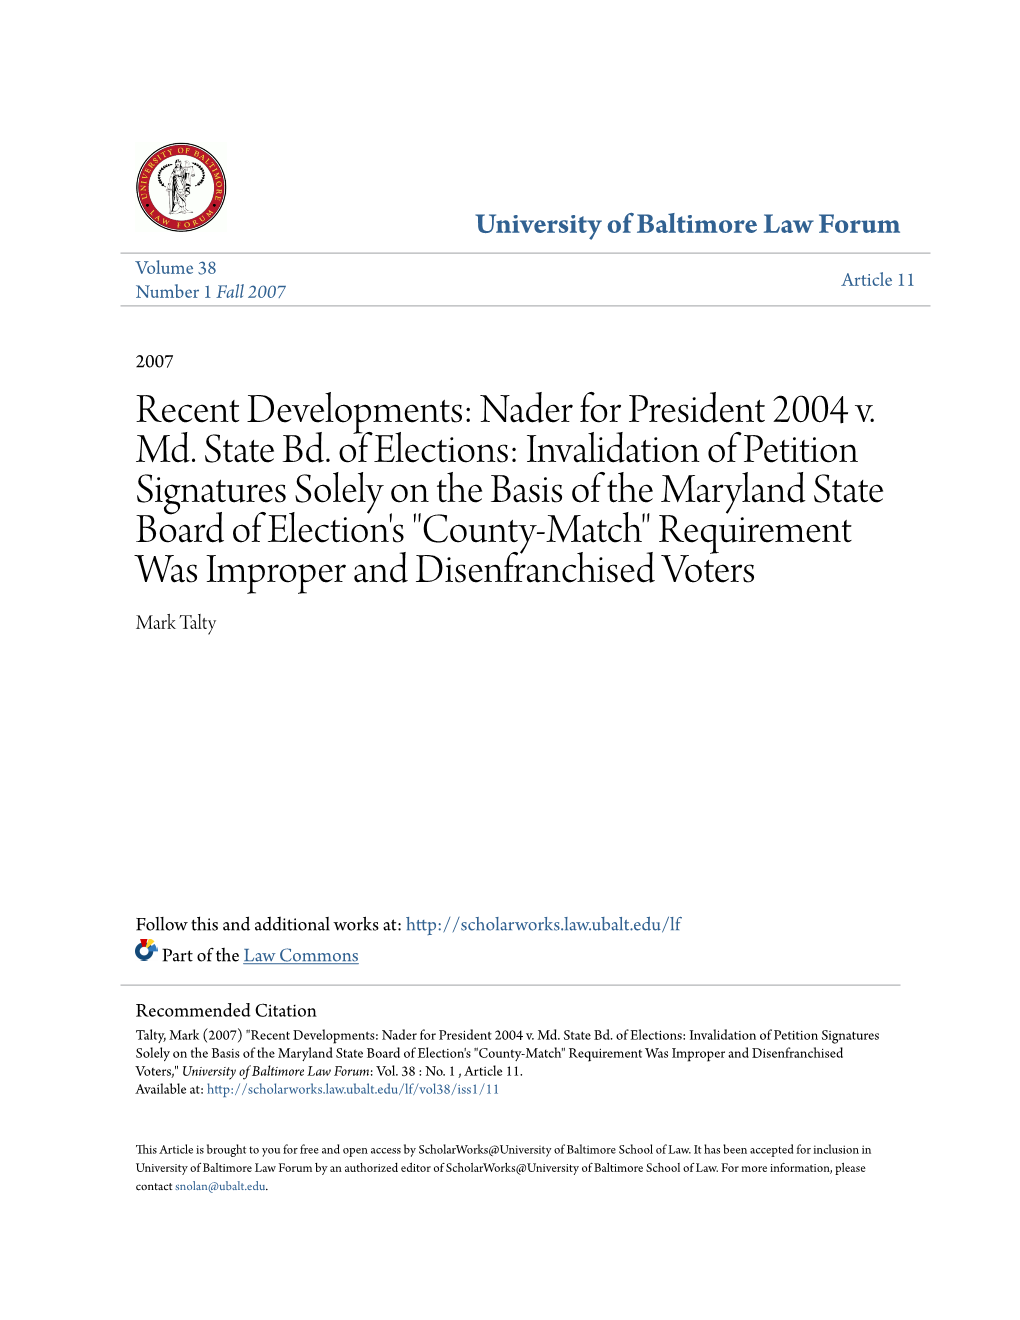 Nader for President 2004 V. Md. State Bd. of Elections: Invalidation Of